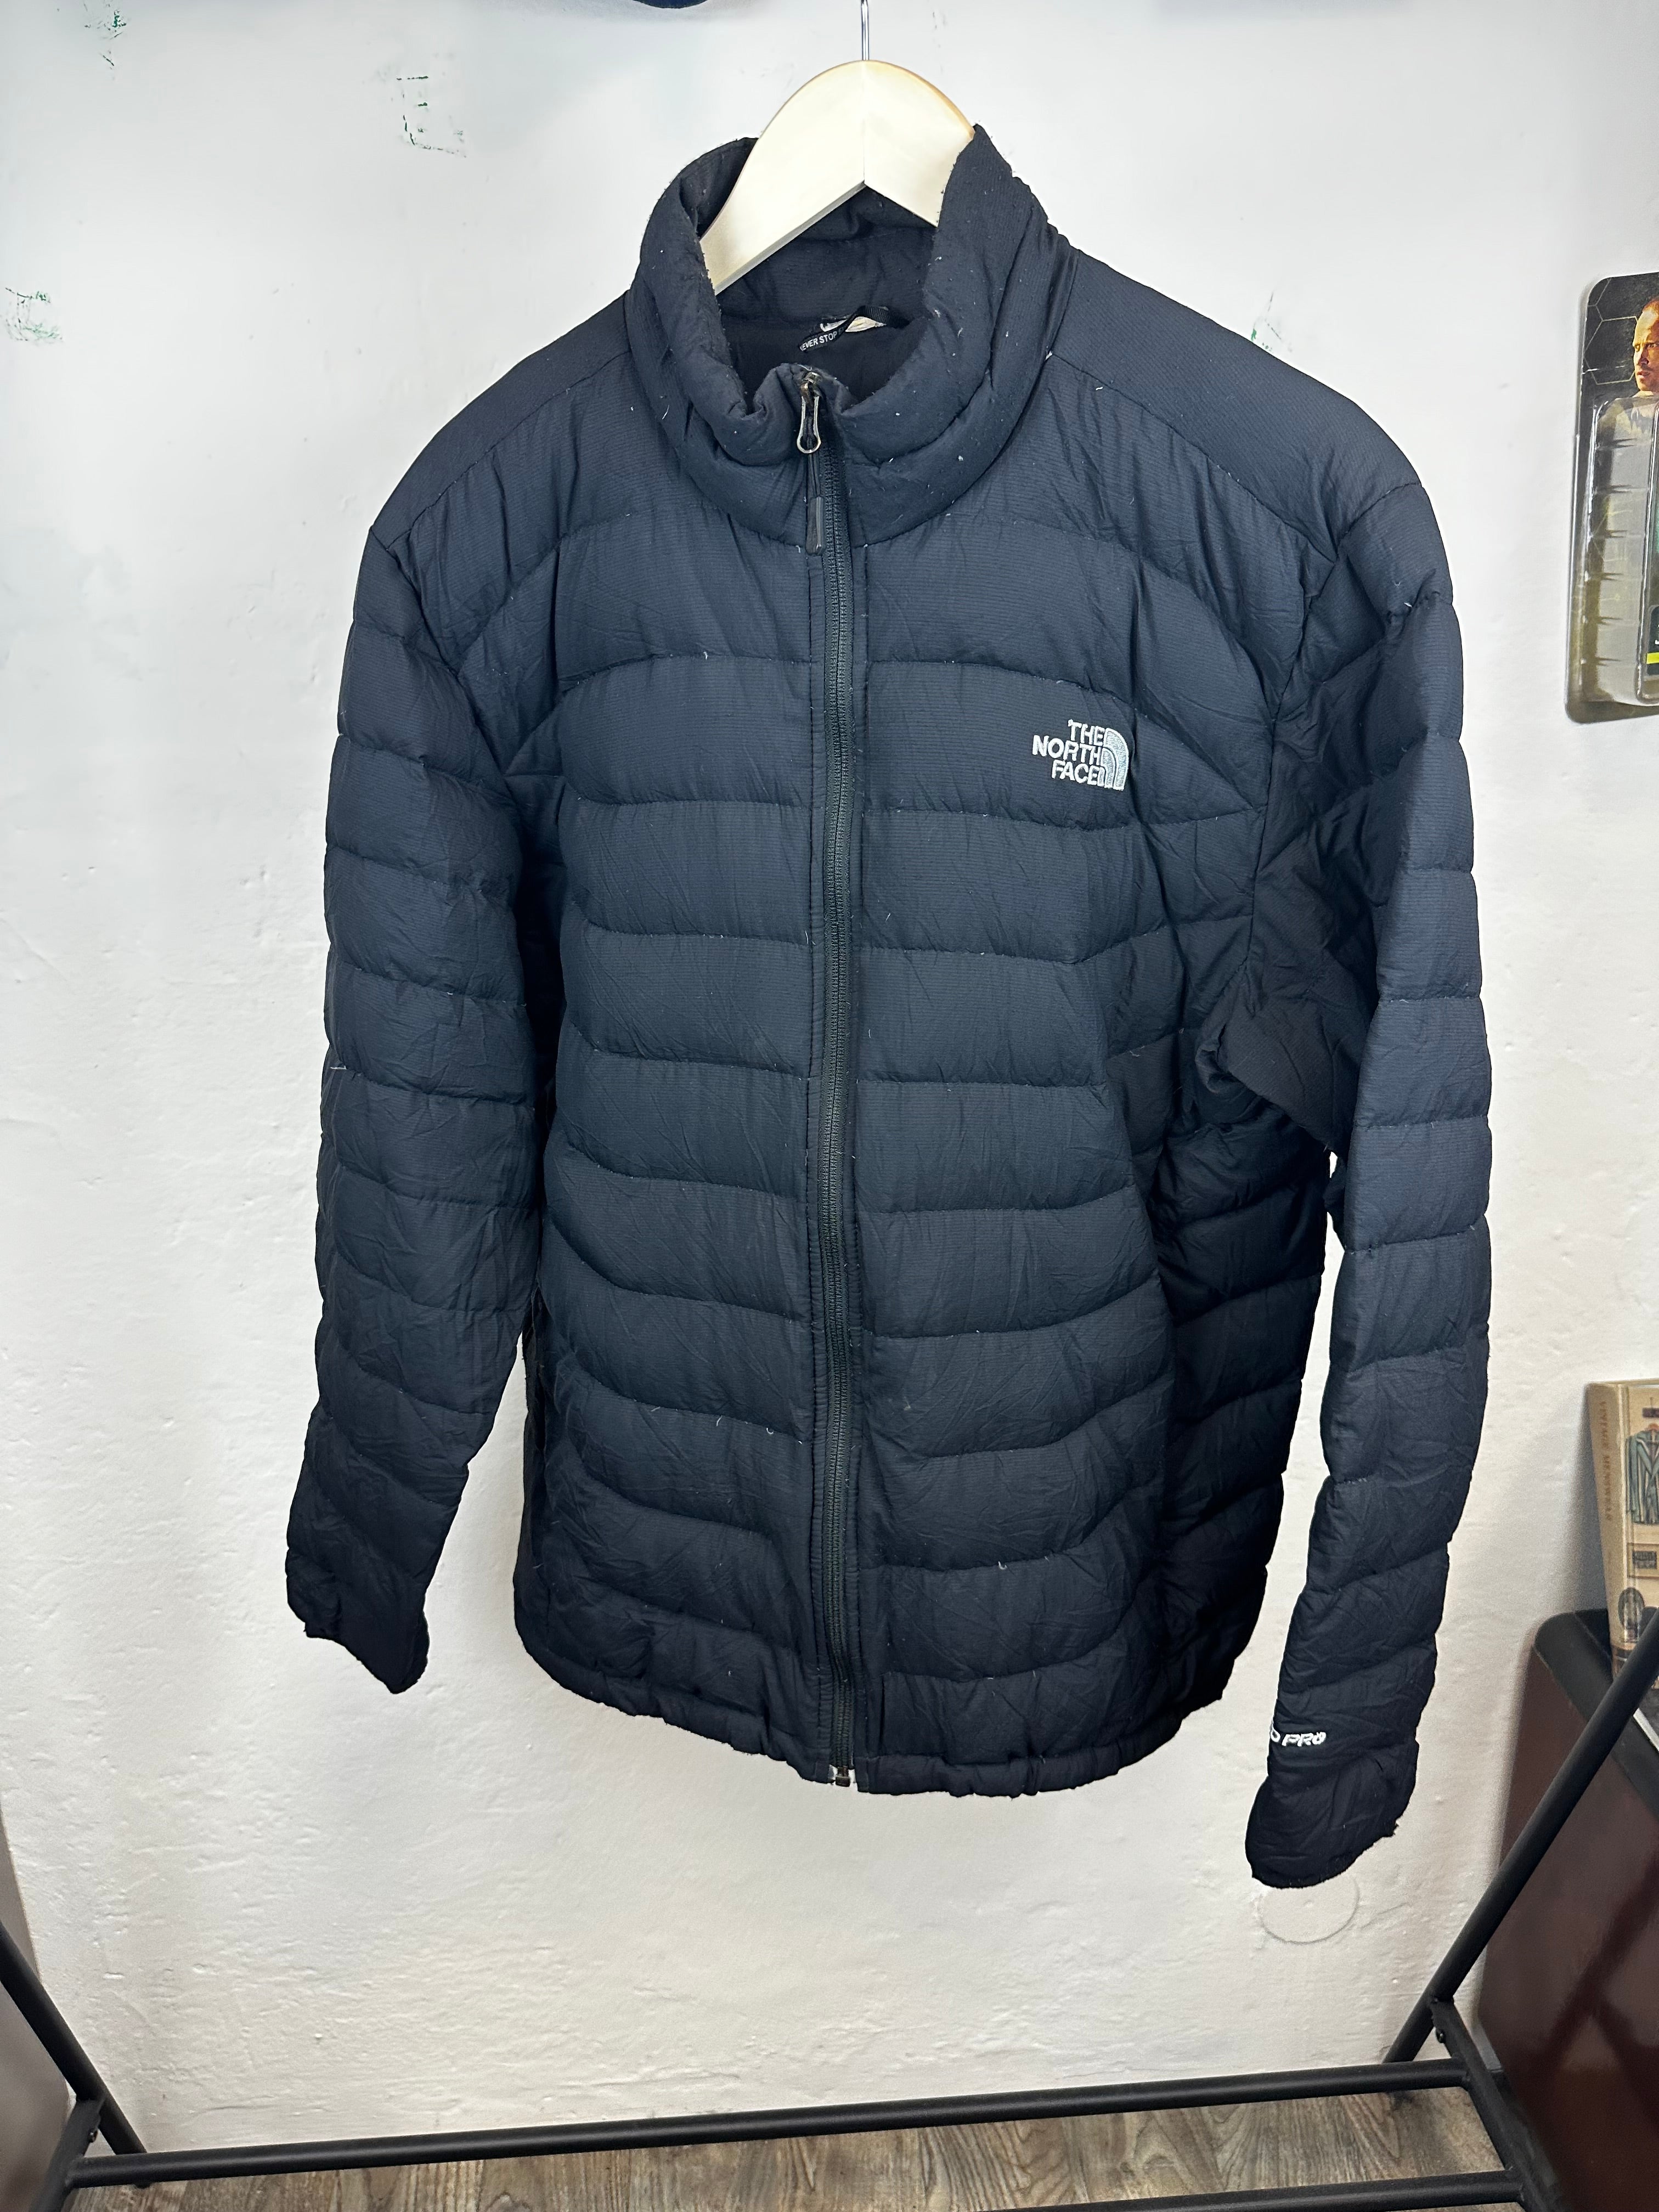 Vintage The North Face 96 Retro Nuptse jacket - size L